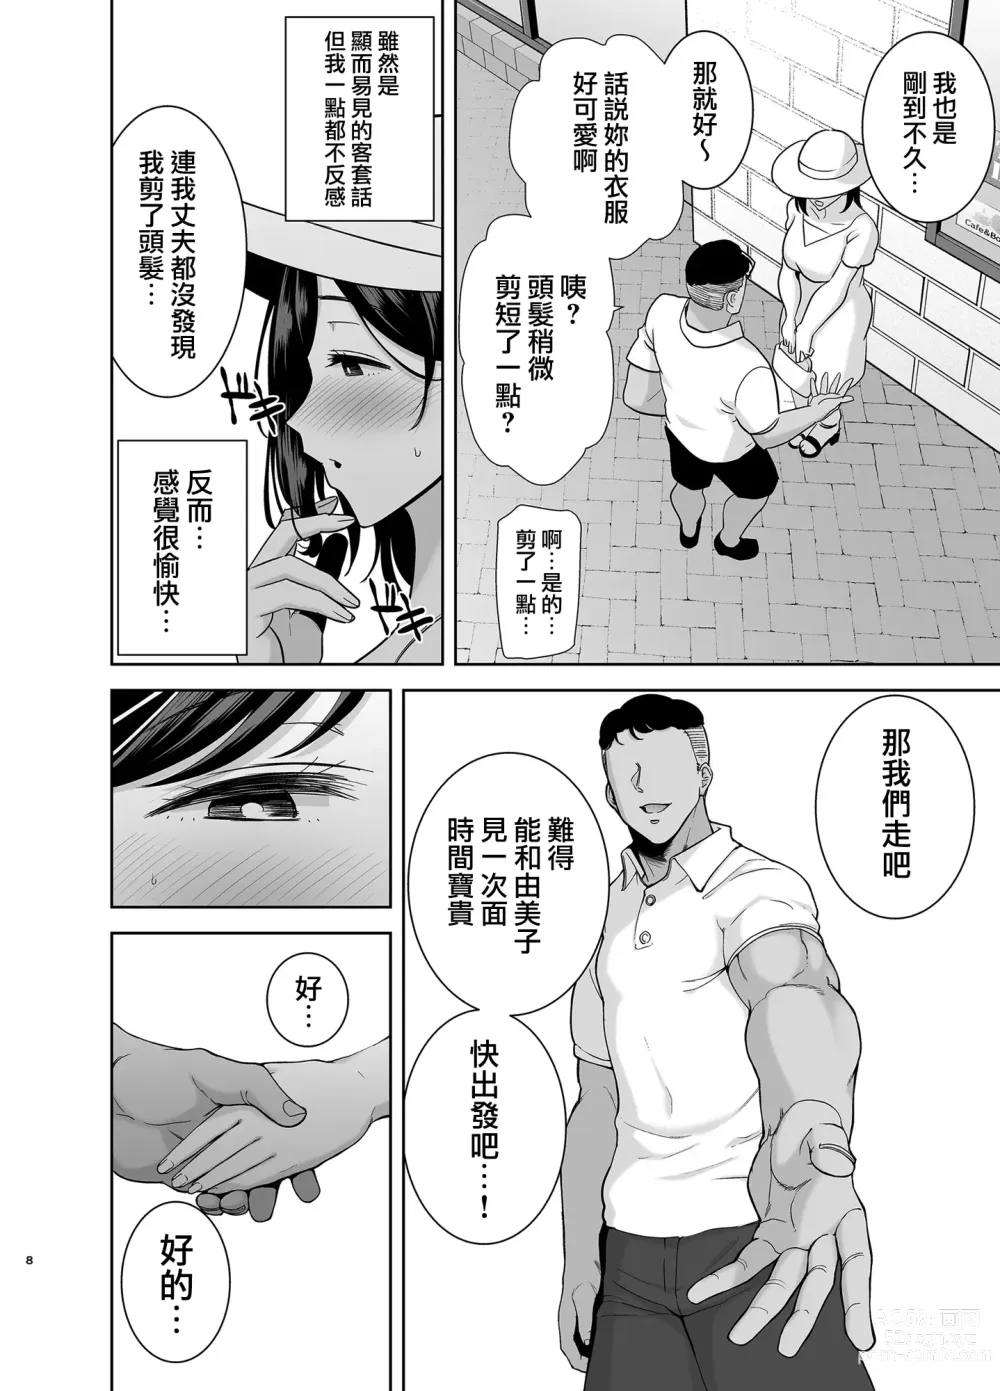 Page 7 of doujinshi sdasd